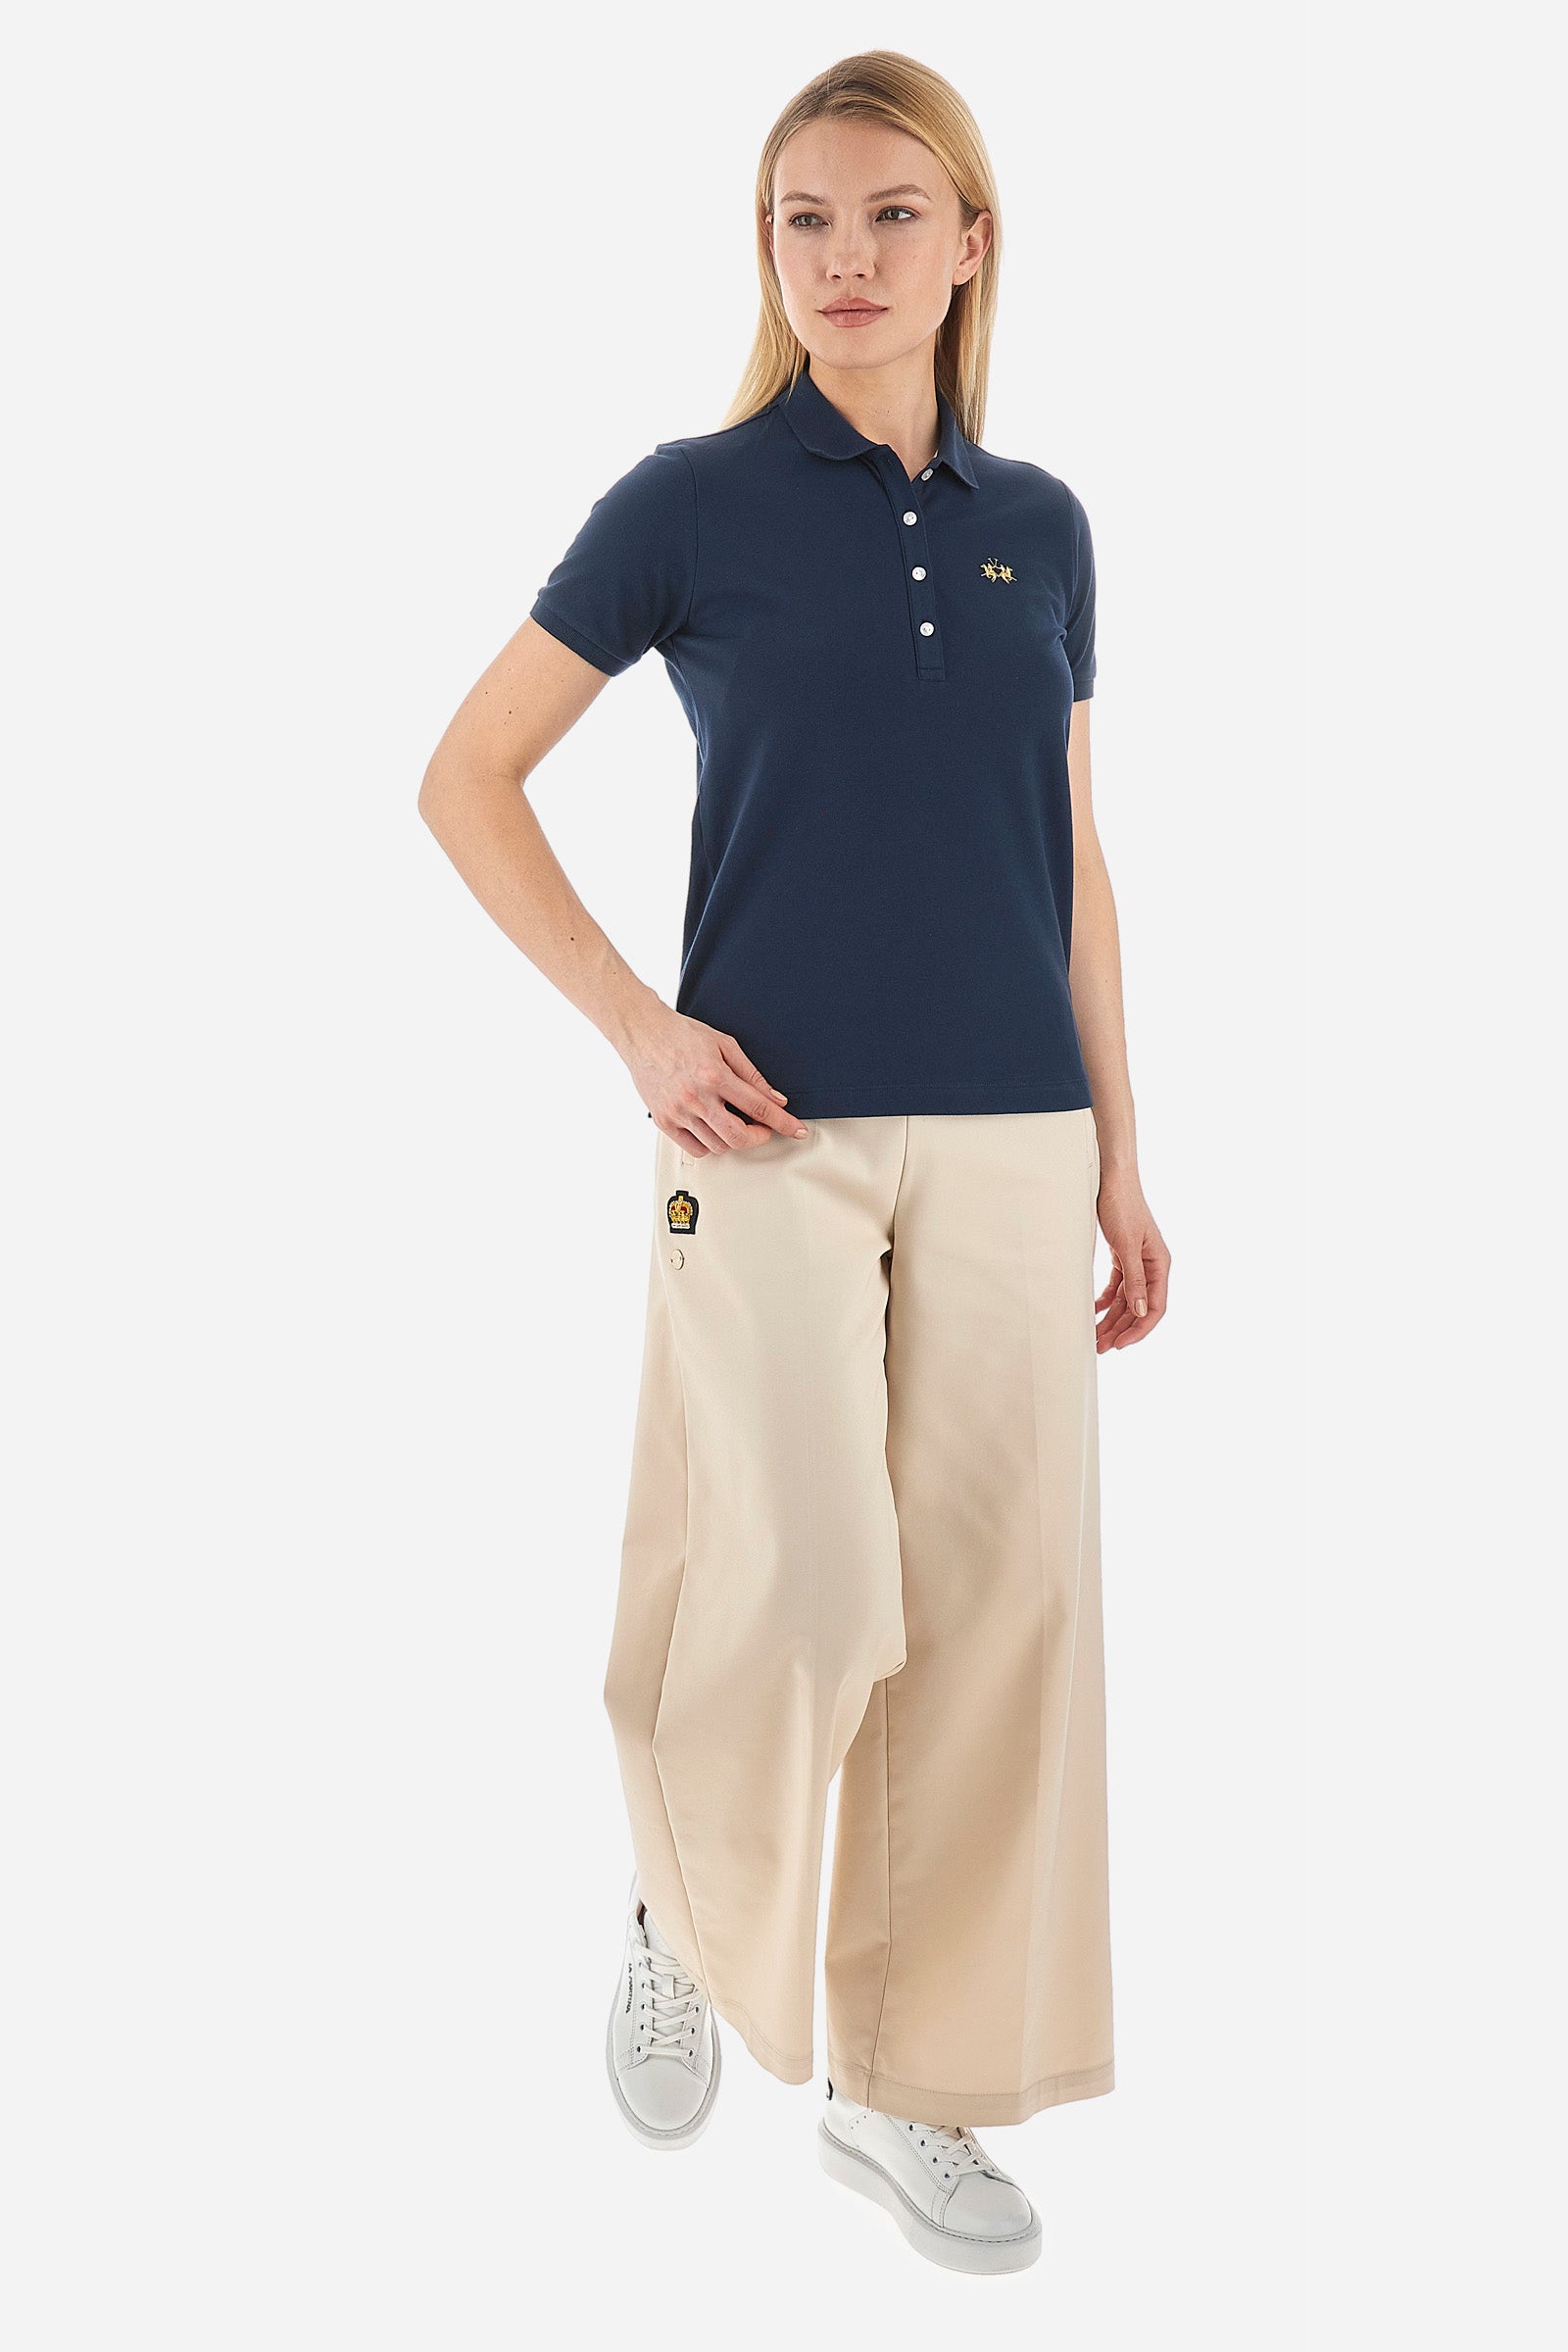 Women's polo shirt in a regular fit - Amalia